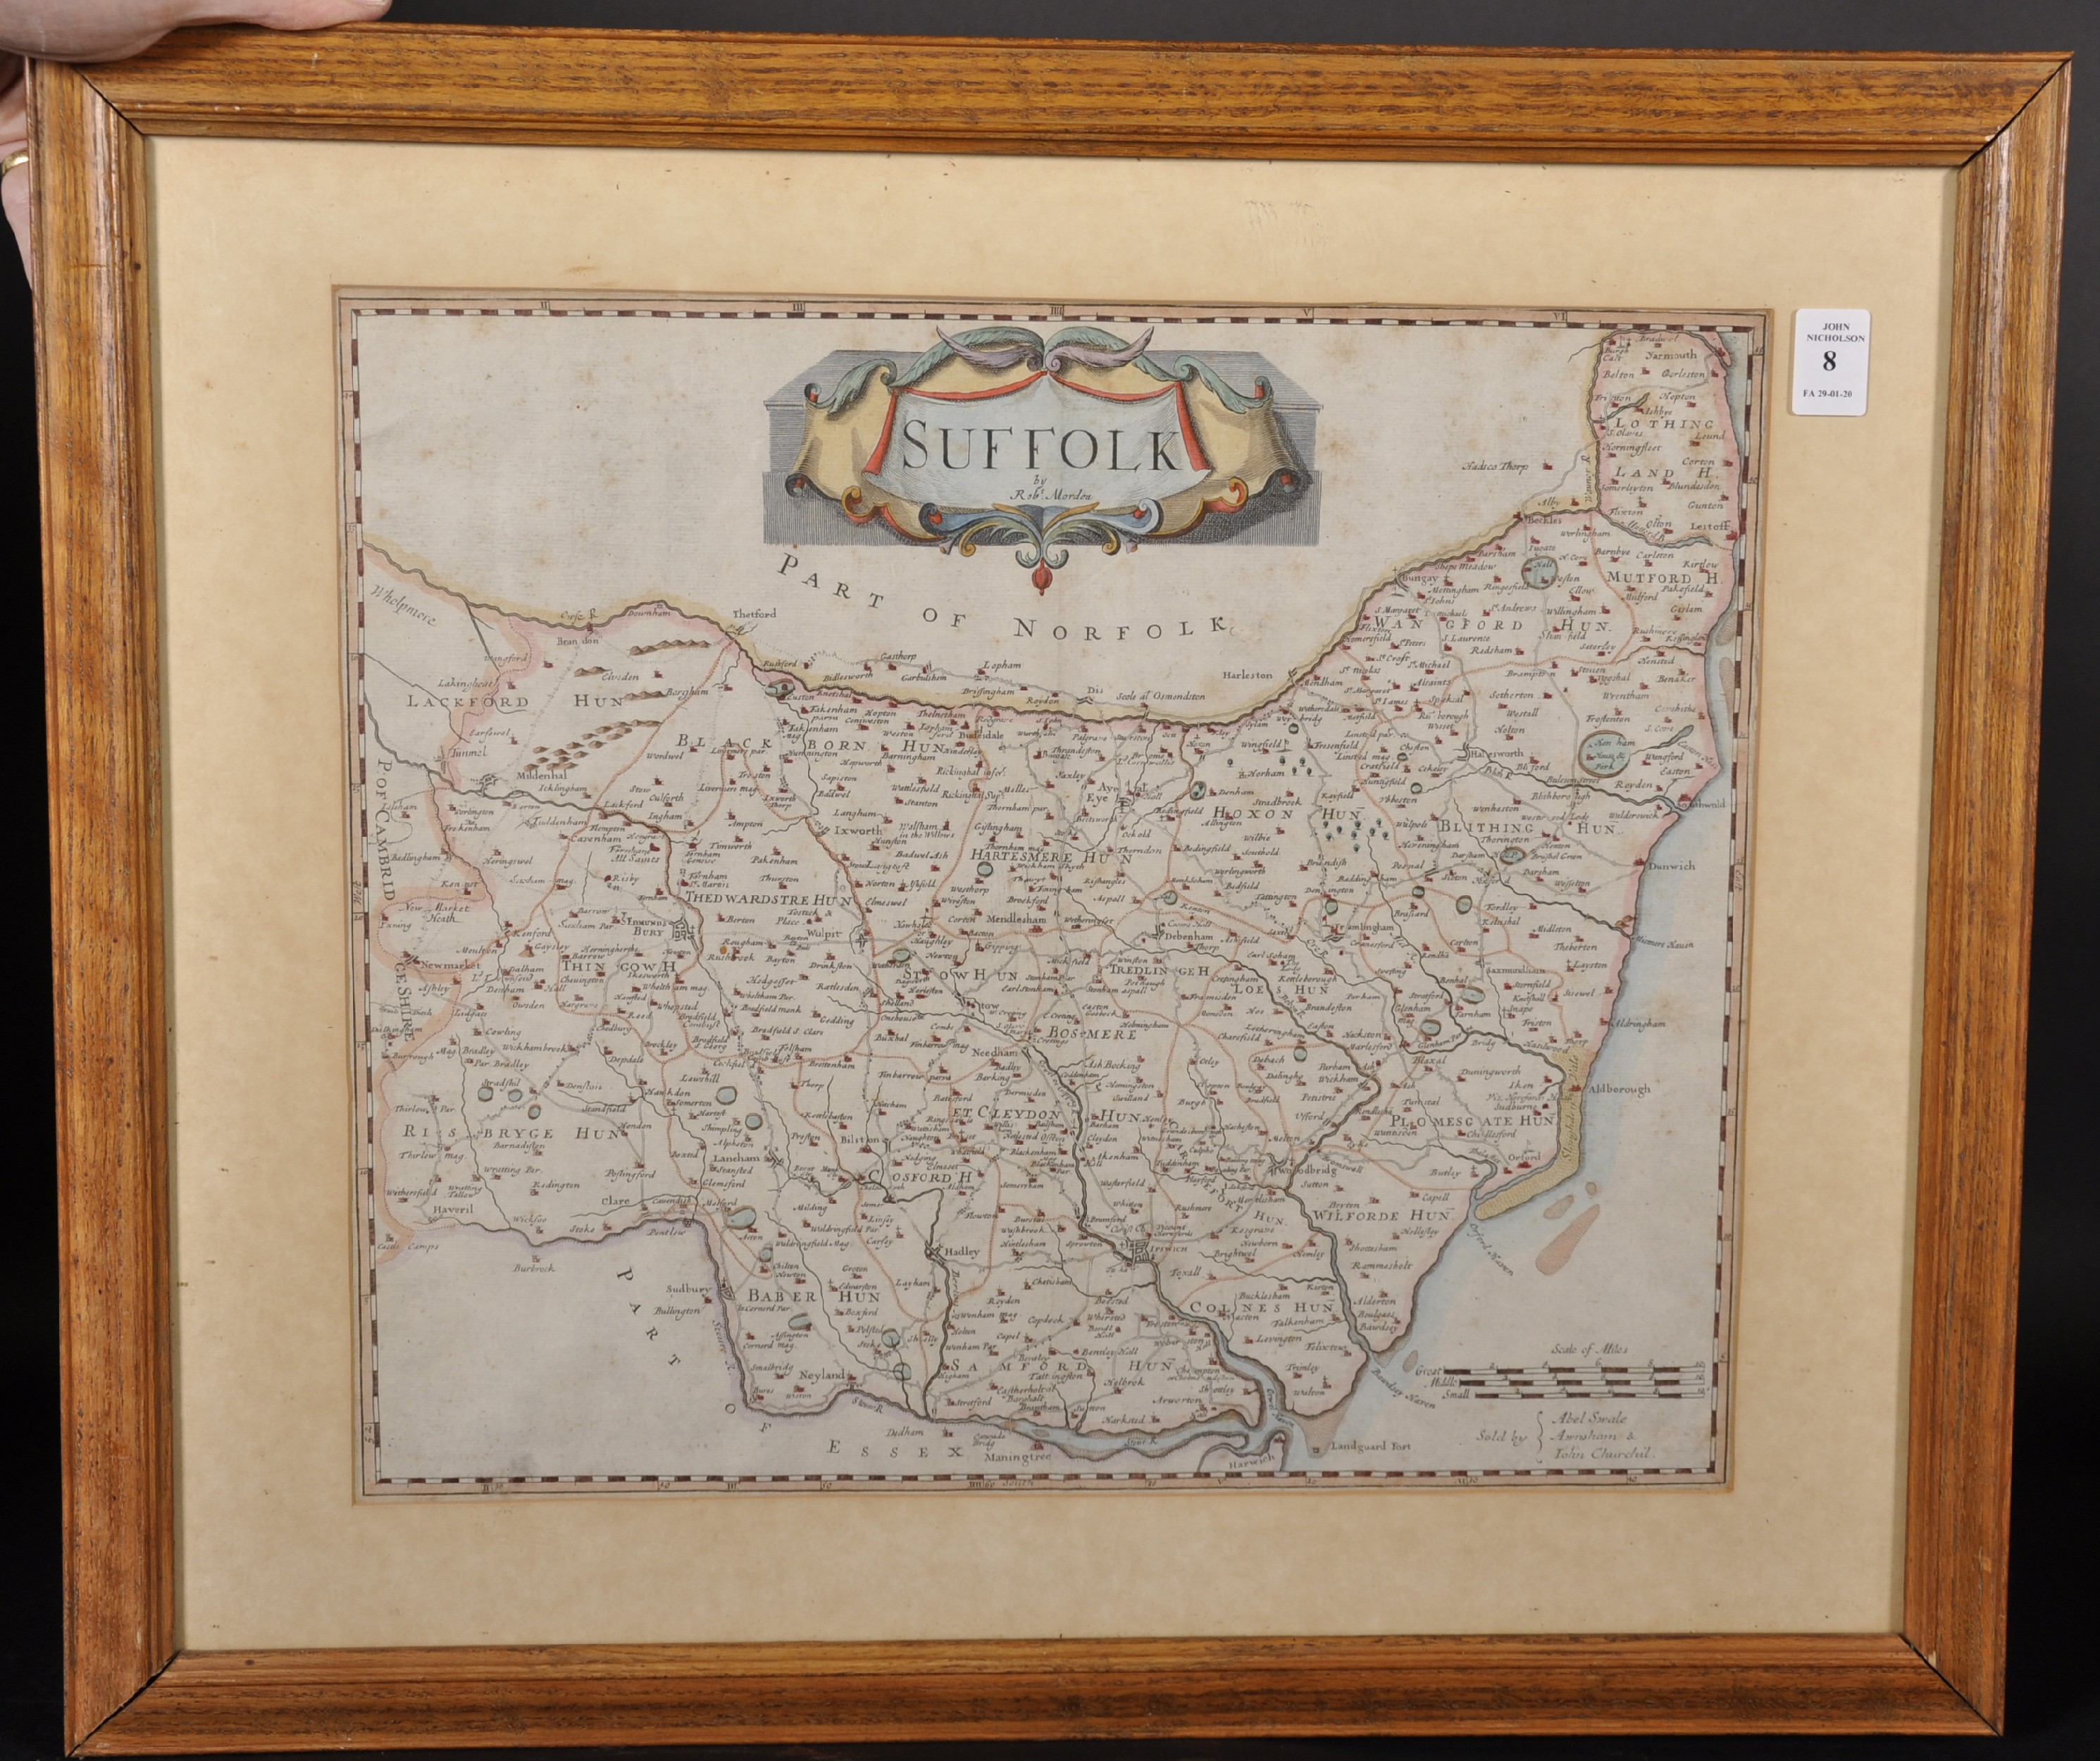 Robert Morden (c.1650-1703) British. "Suffolk", Map, 14" x 16.25". - Image 2 of 4